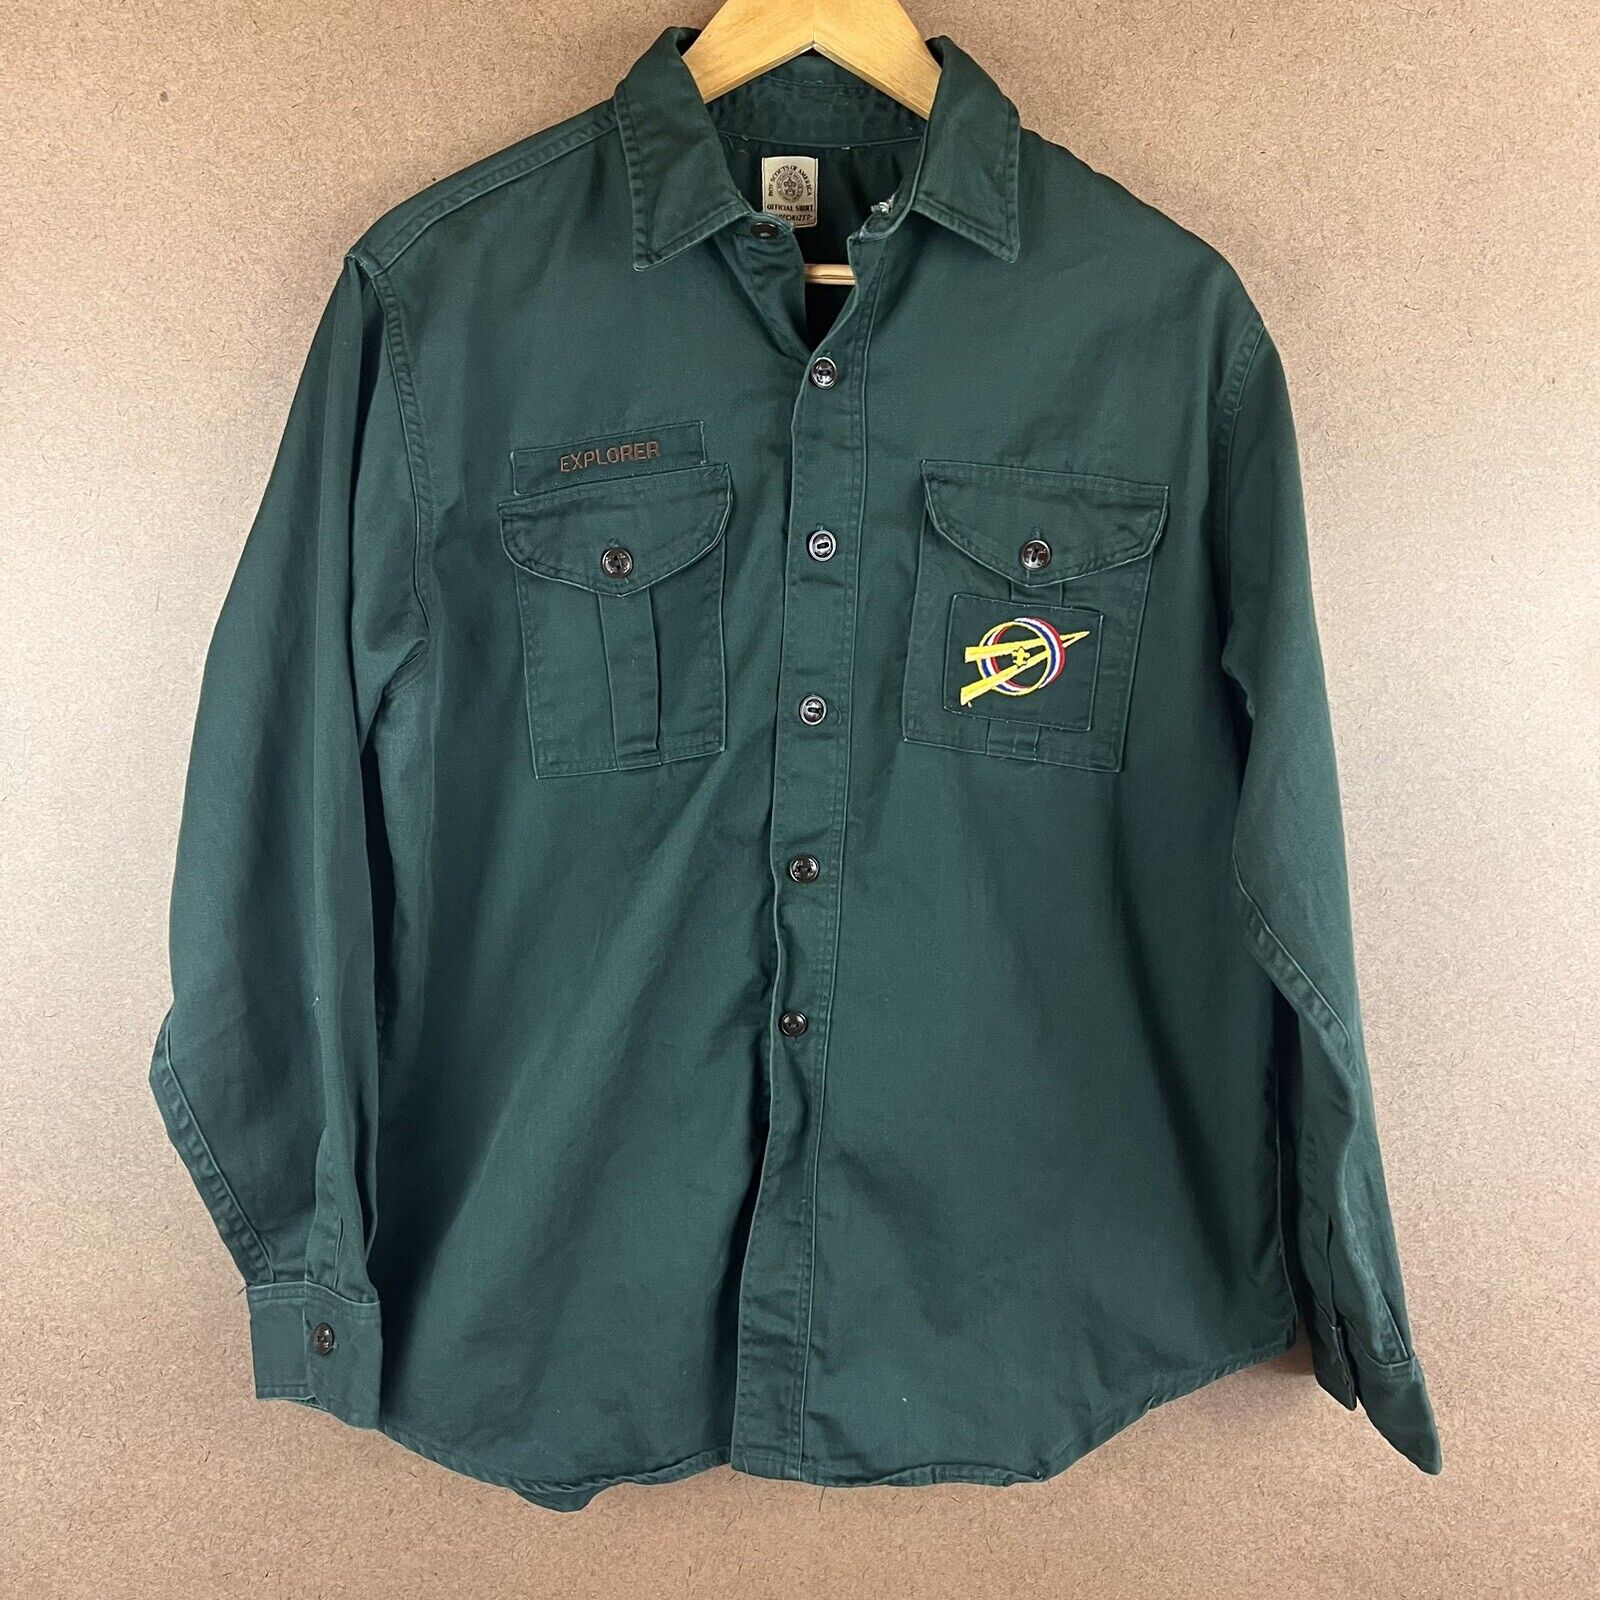 VTG 1950s BSA Boy Scouts Explorer Uniform Shirt Sanforized Medium